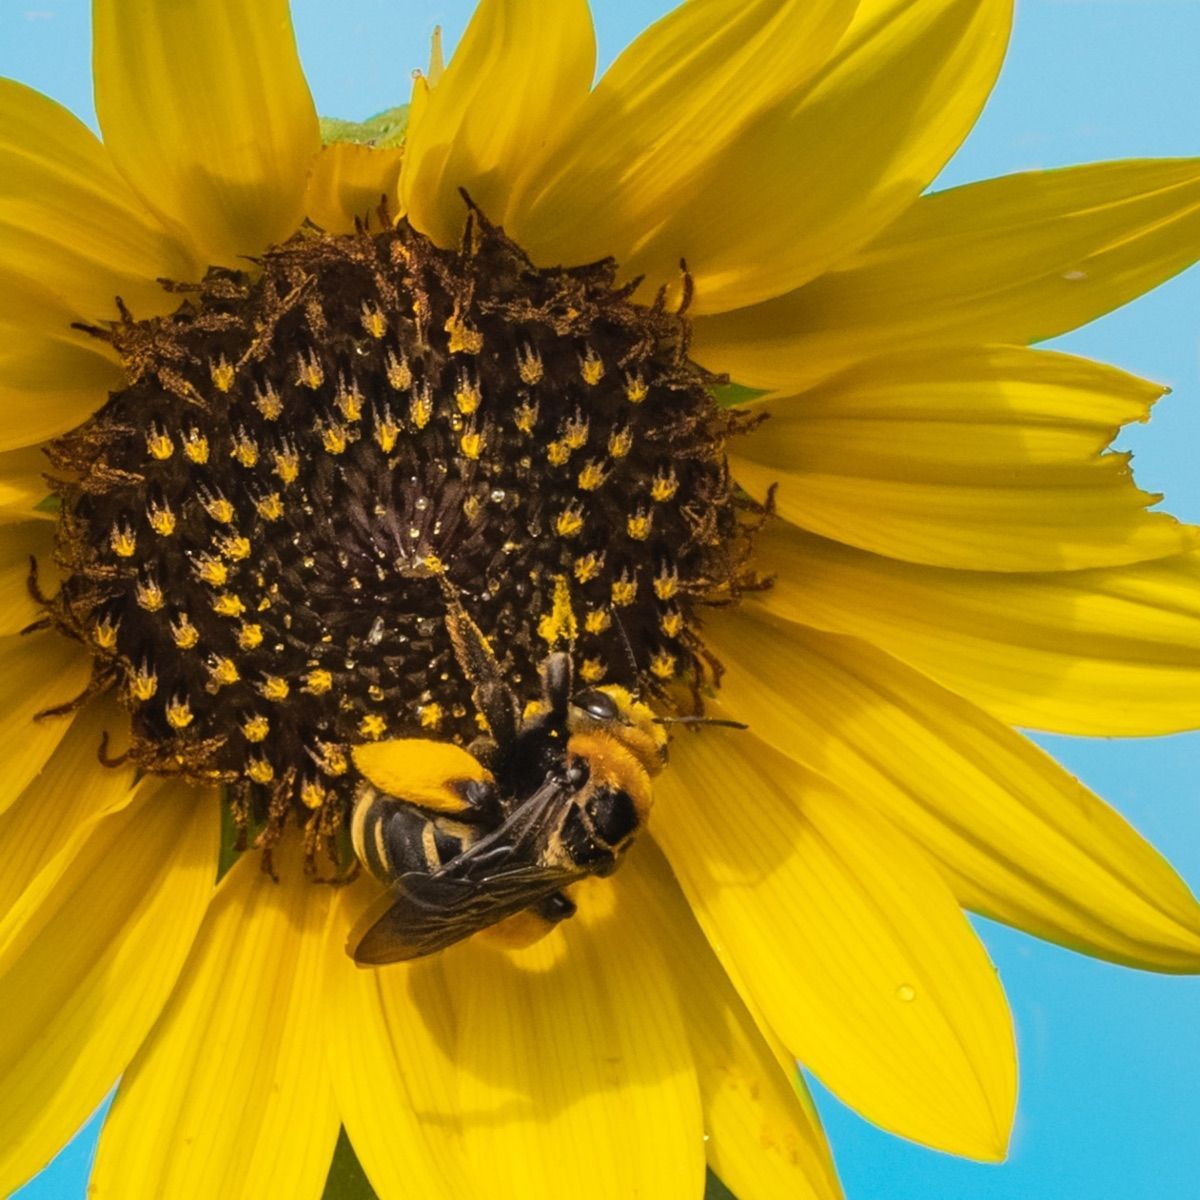 Bee in Sunflower